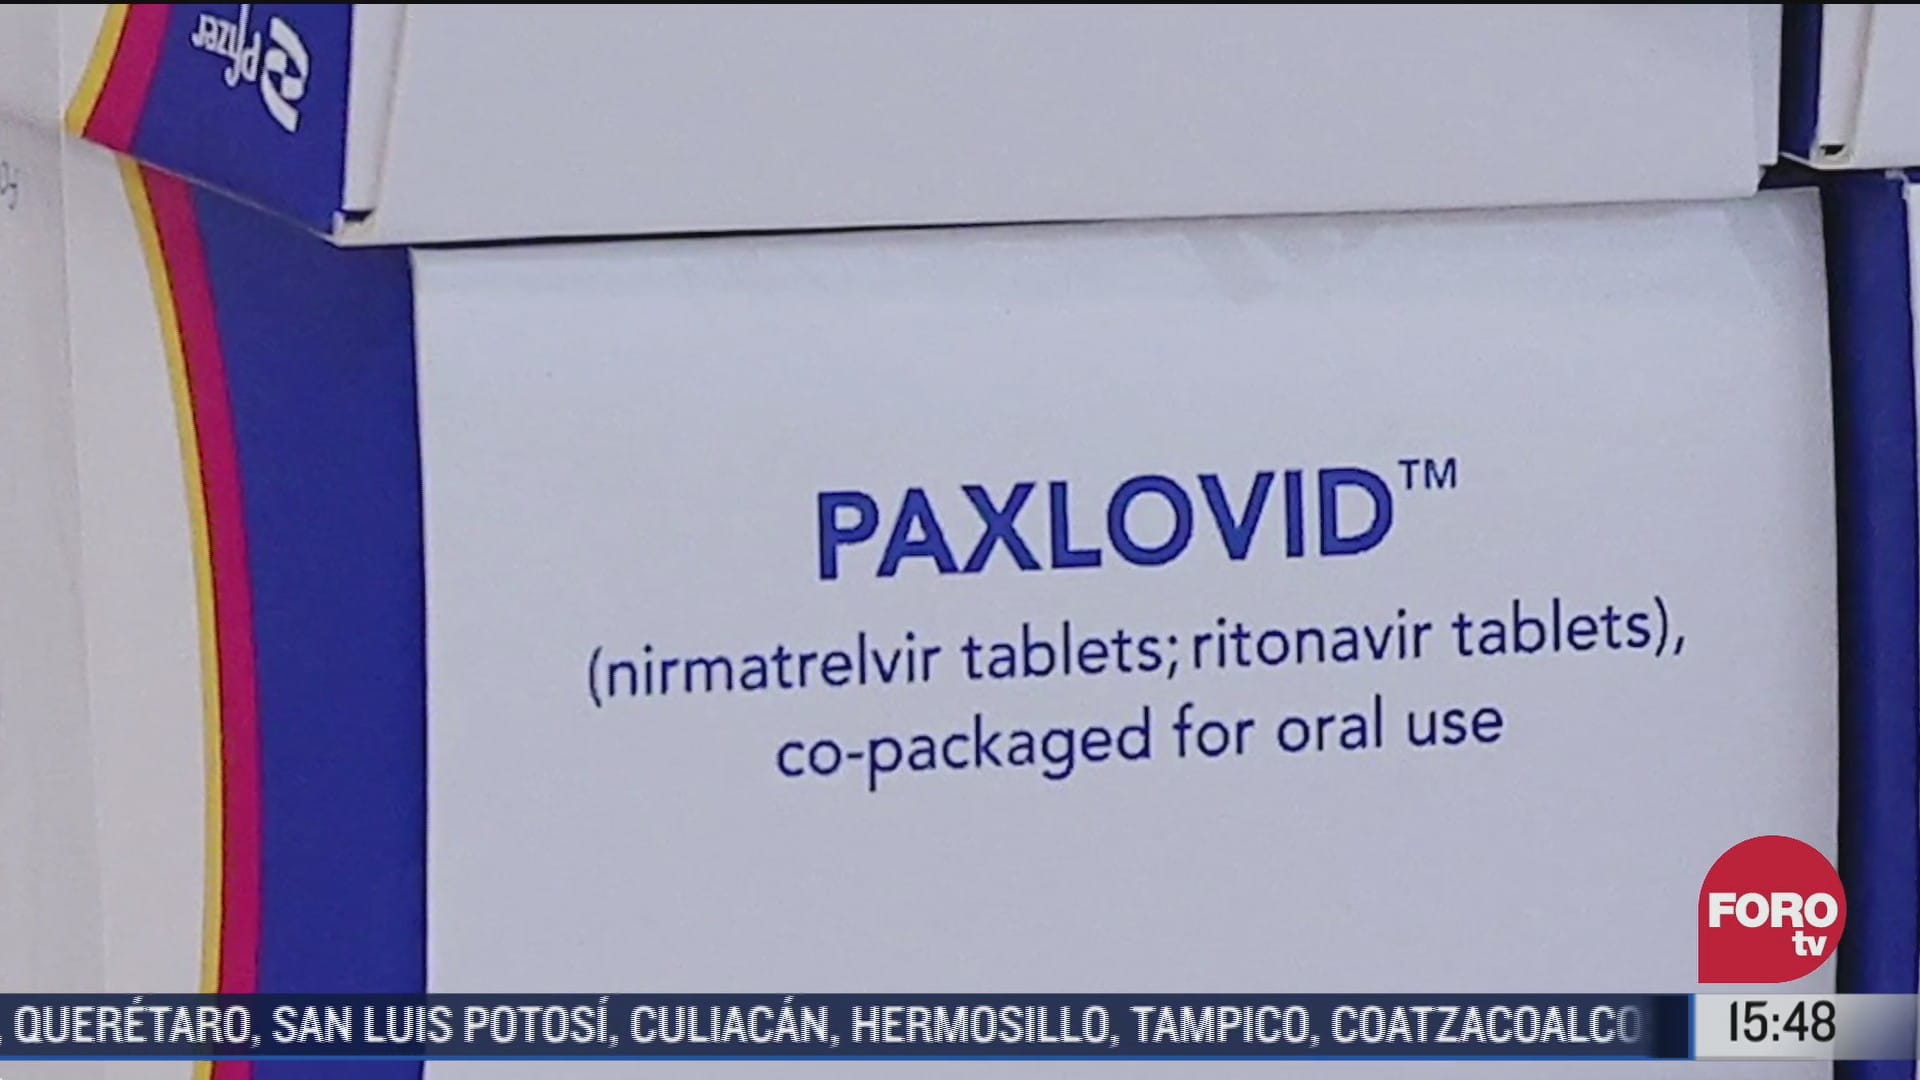 paxlovid segundo antiviral contra covid 19 autorizado por cofepris